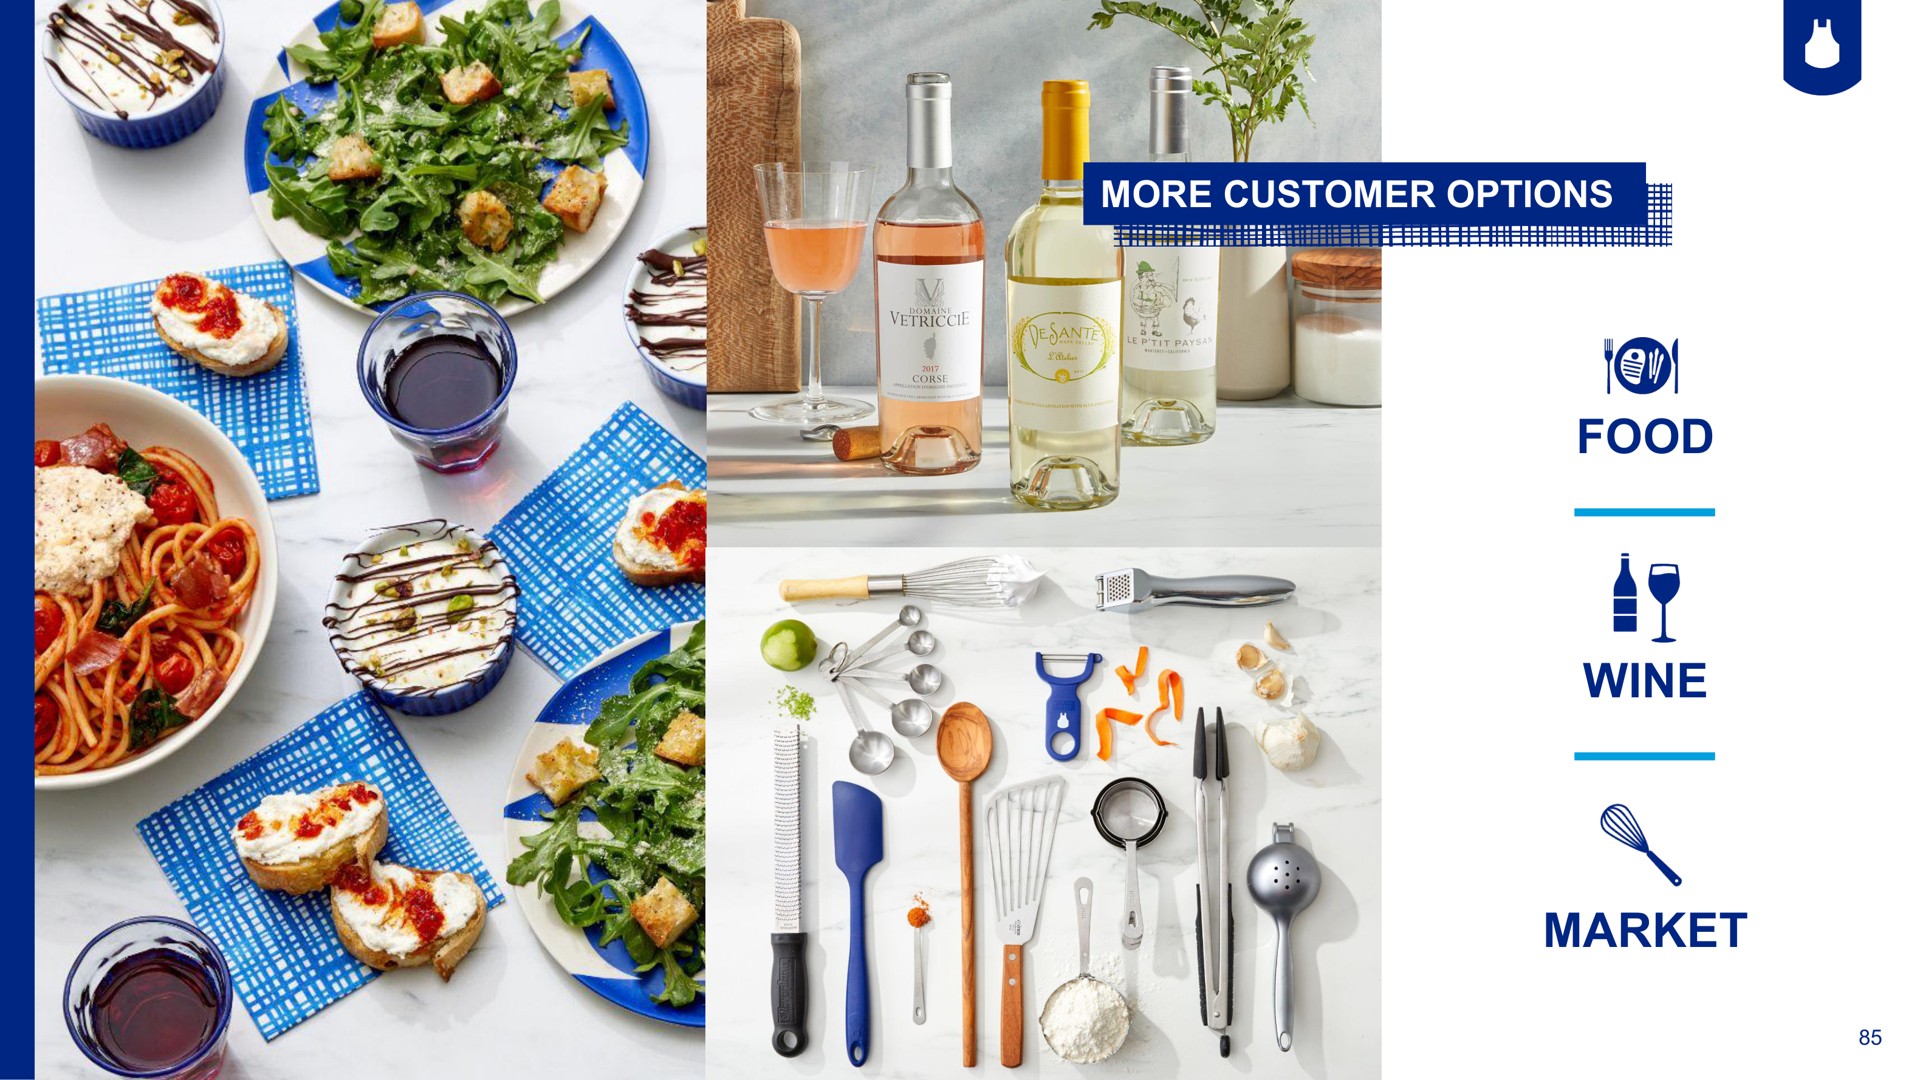 more customer options food wine market | Blue Apron